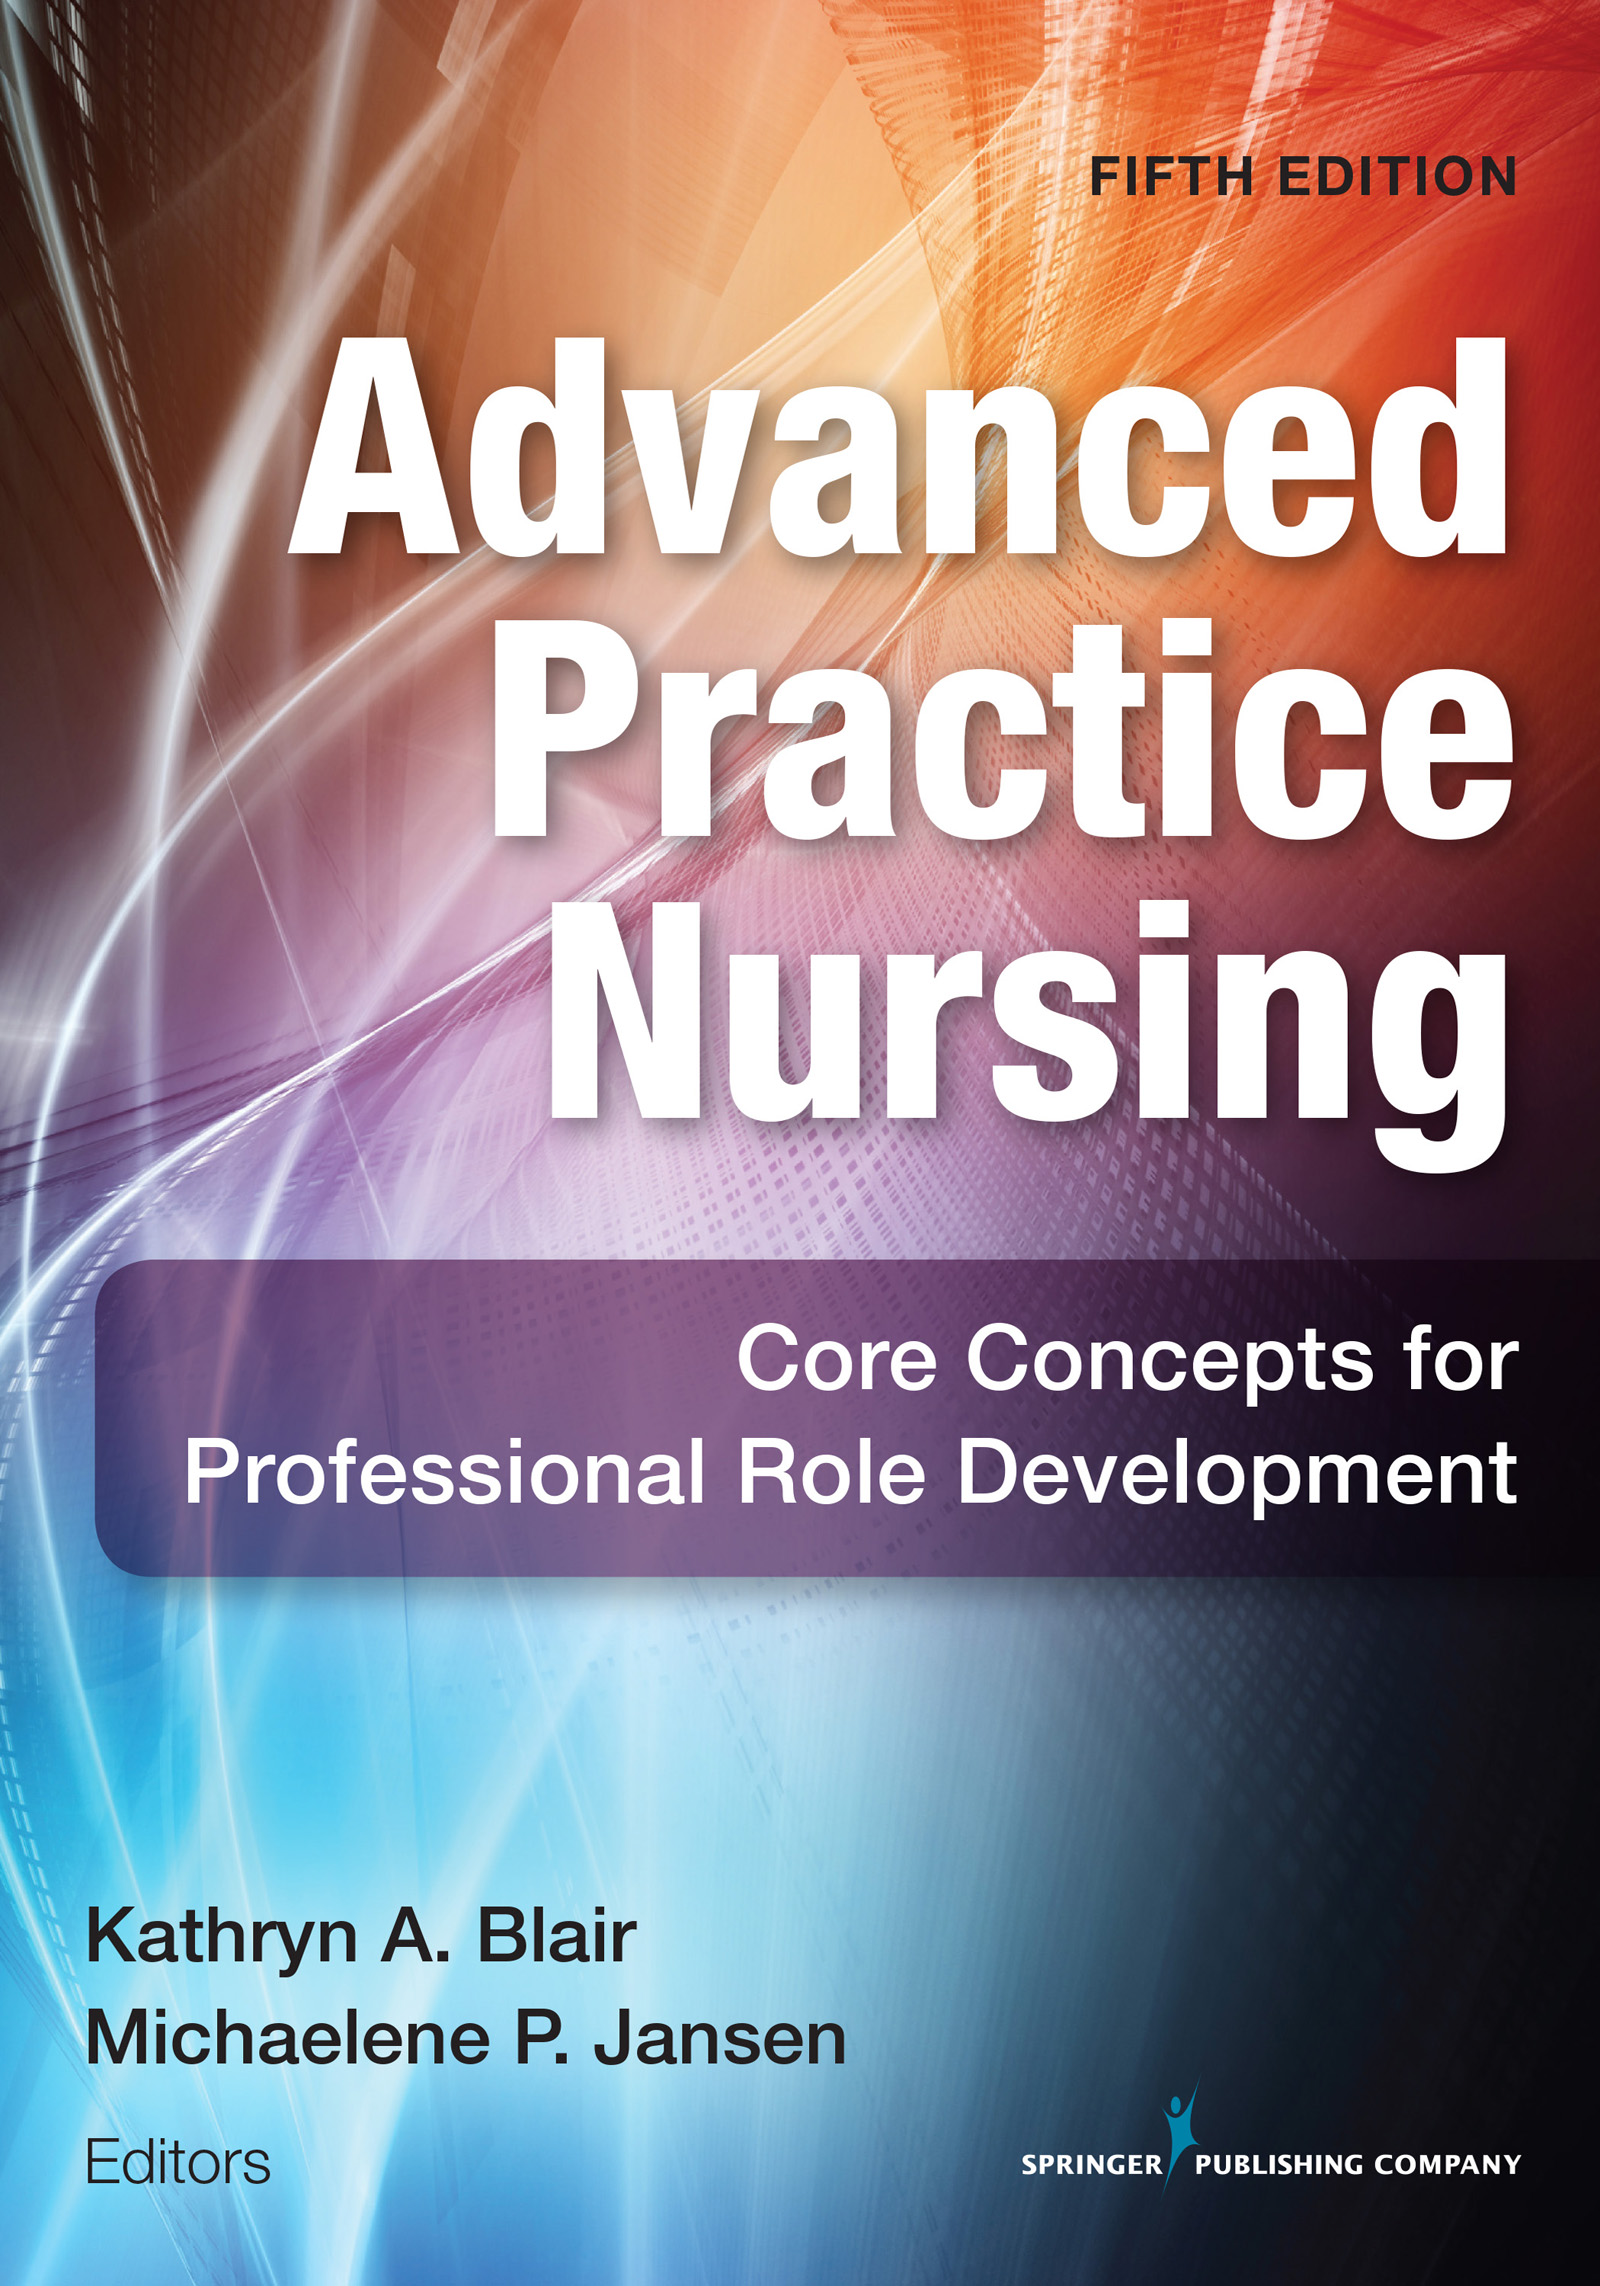 Advanced Practice Nursing: Essentials for Role Development [Book]